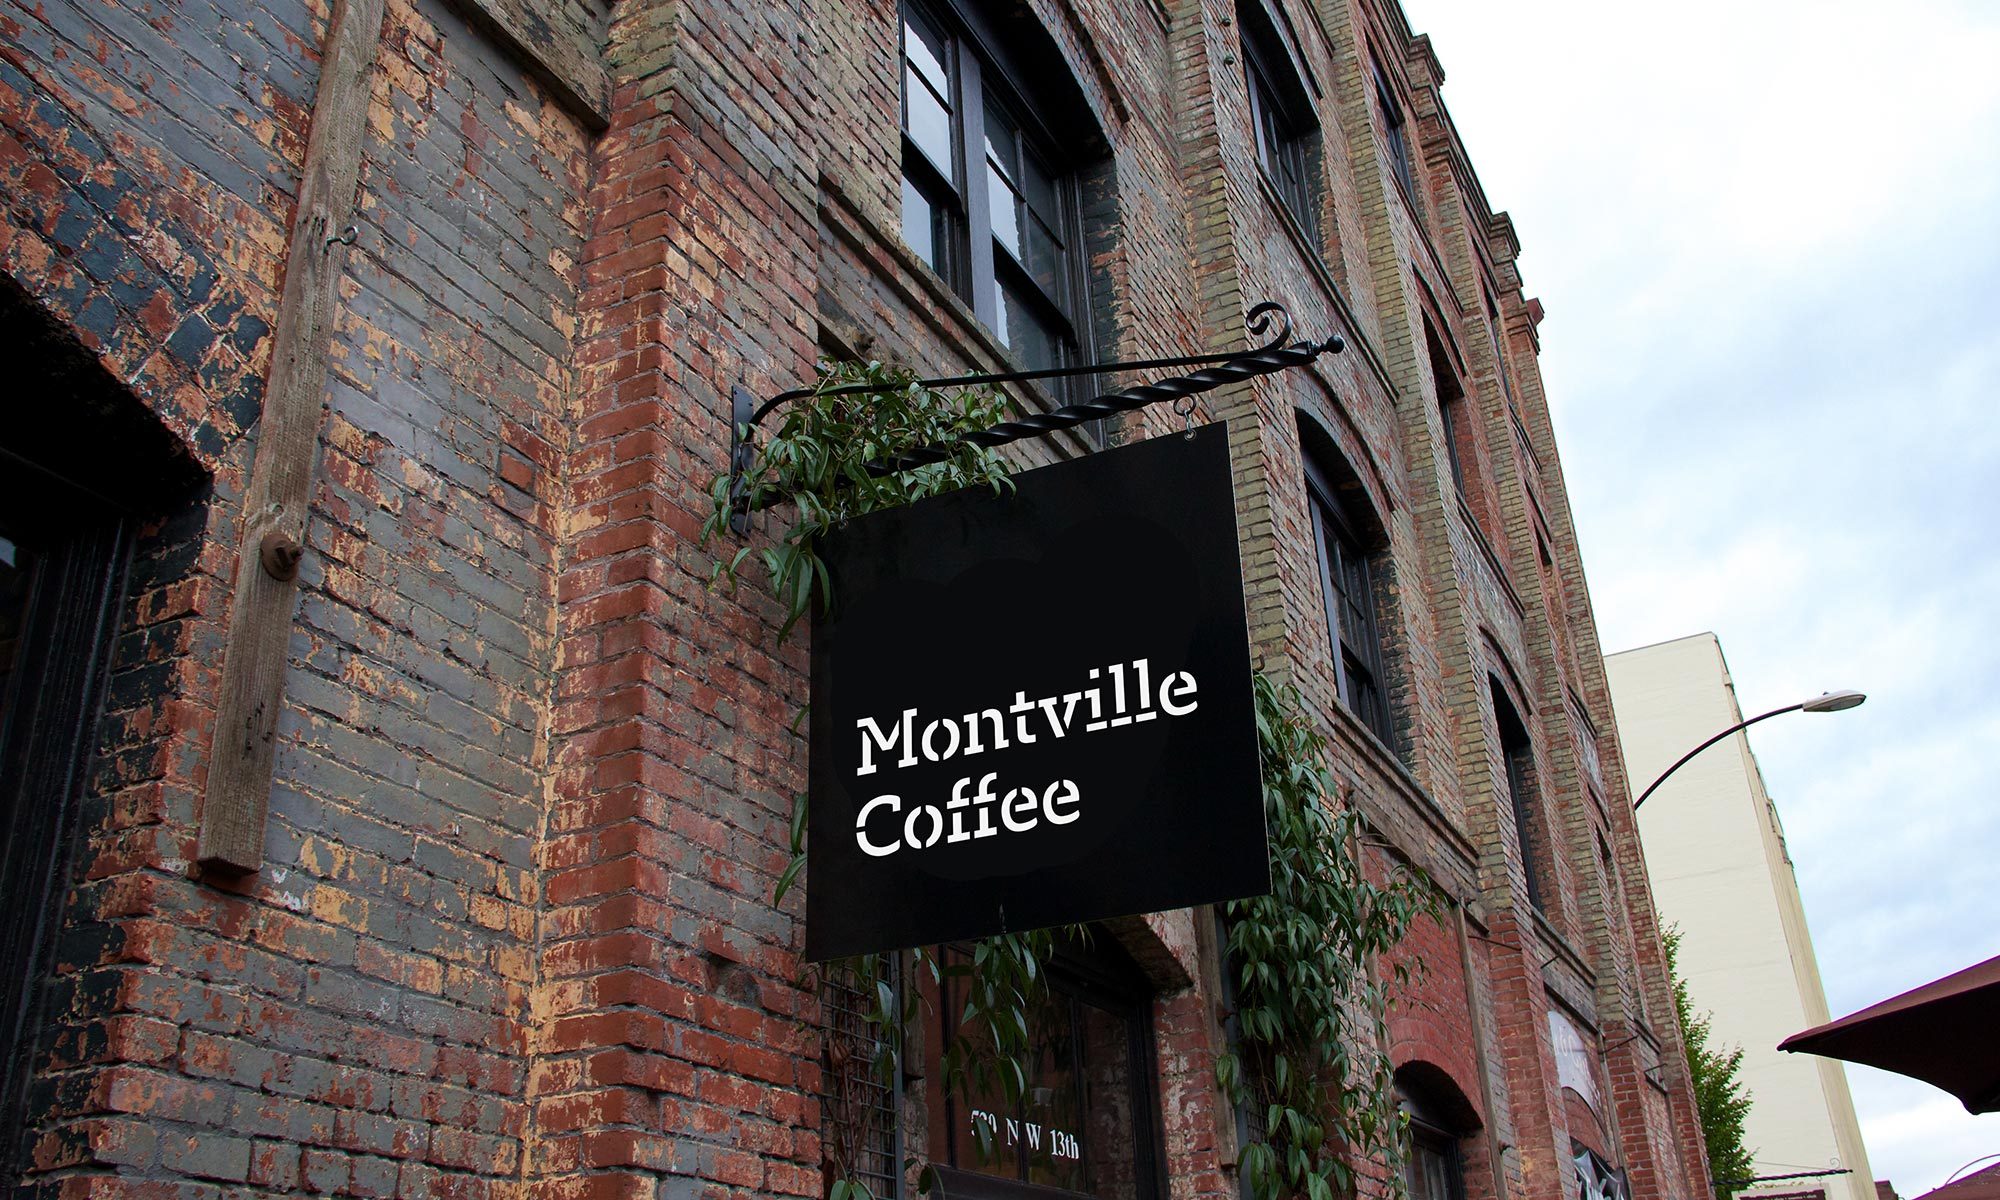 Montville Coffee signage